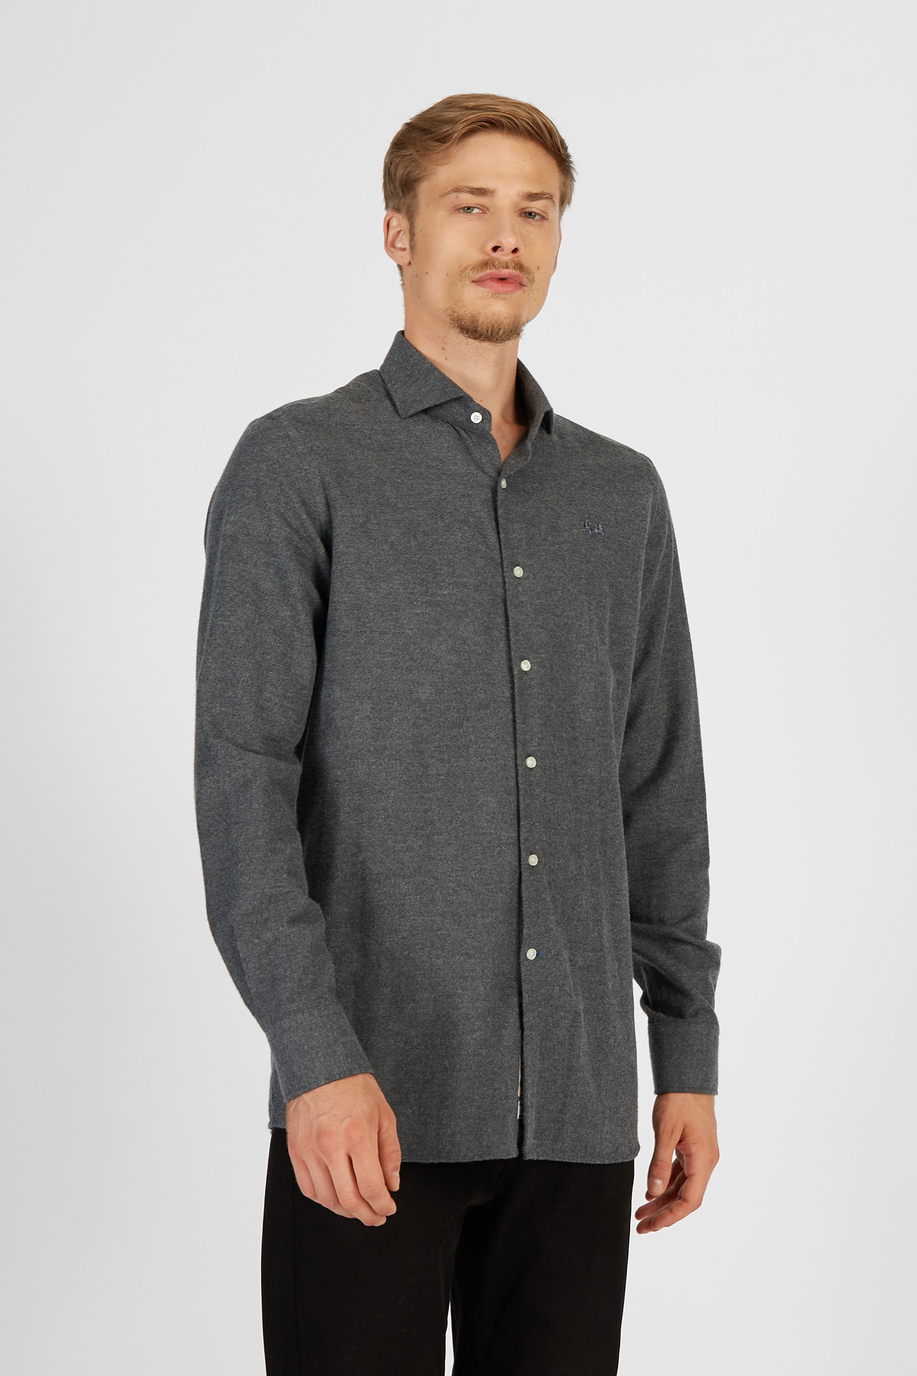 Blue Ribbon Herrenhemd mit langen Ärmeln aus Flanell Comfort Fit - Hemden | La Martina - Official Online Shop